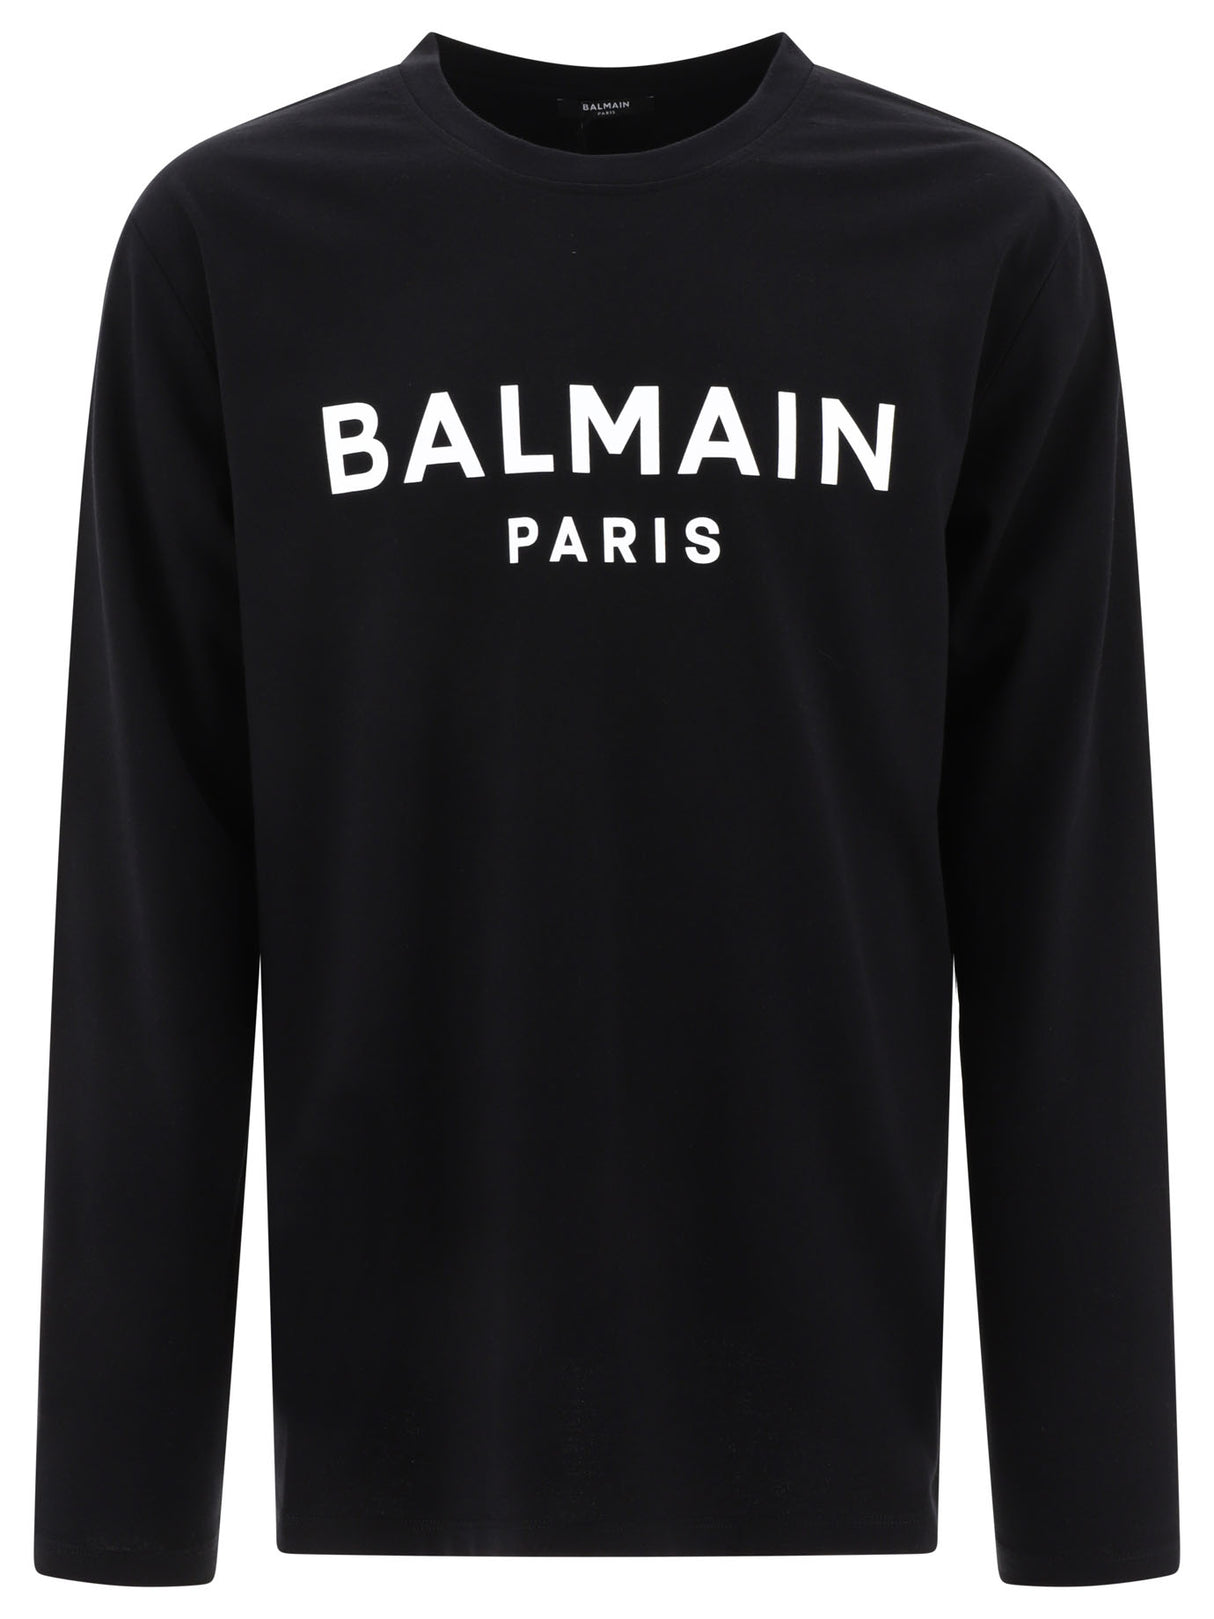 BALMAIN Fall in Love with This Classic Men's Black T-Shirt